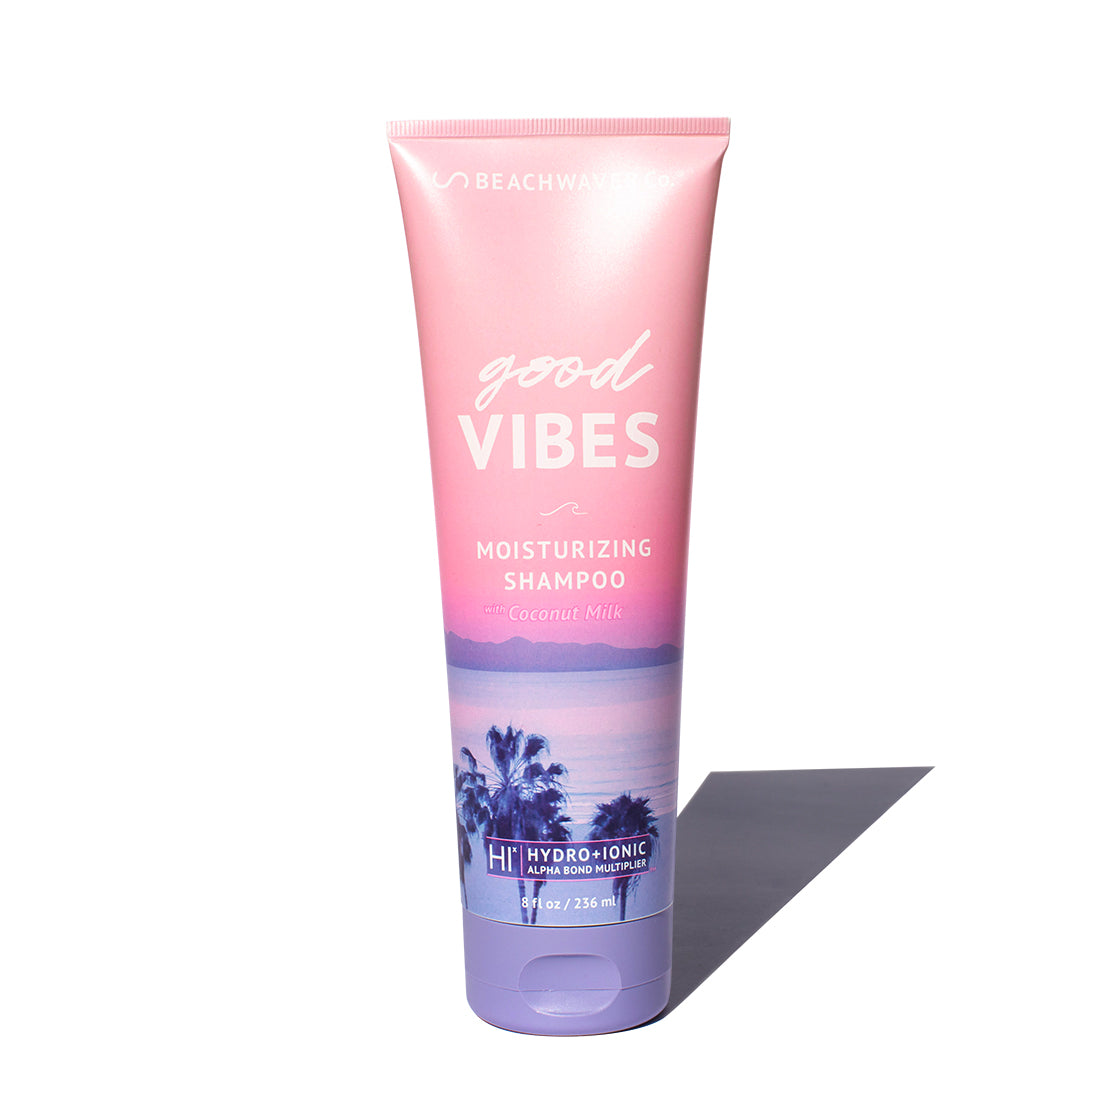 Good Vibes Moisturizing Shampoo - The Beachwaver Co.